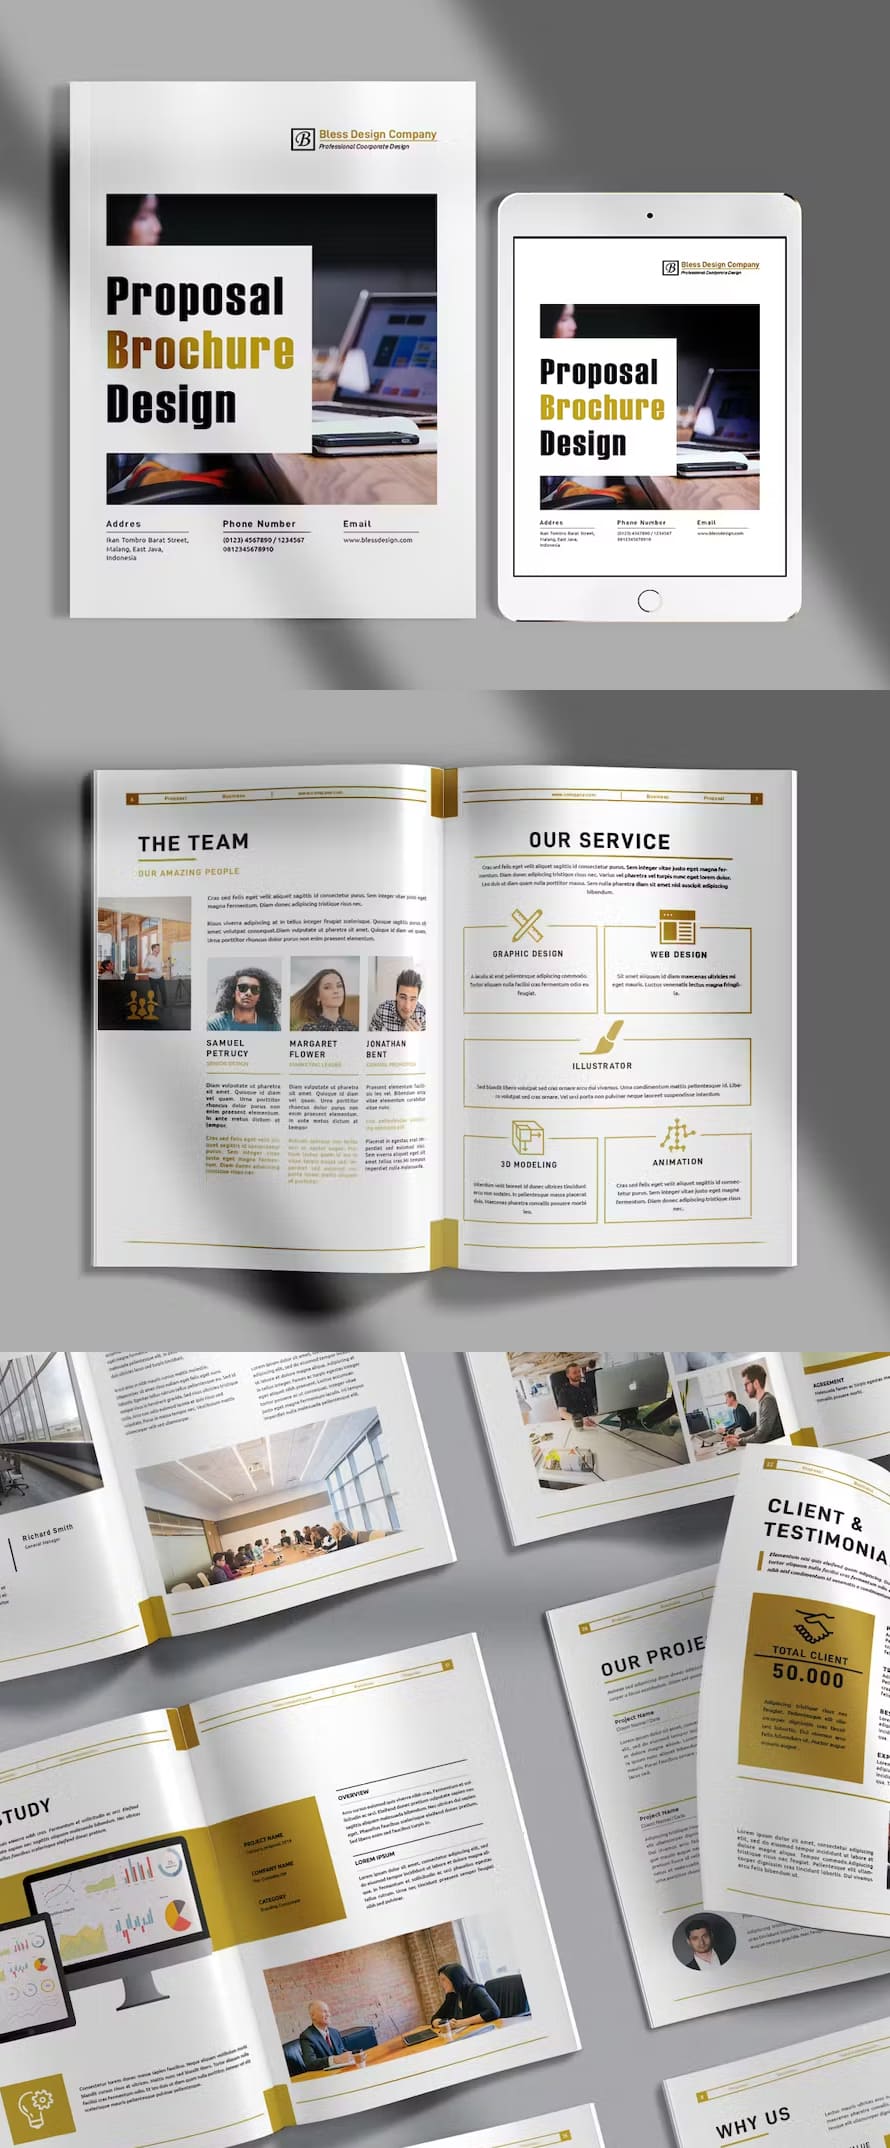 Company Profile / Proposal Brochure Design